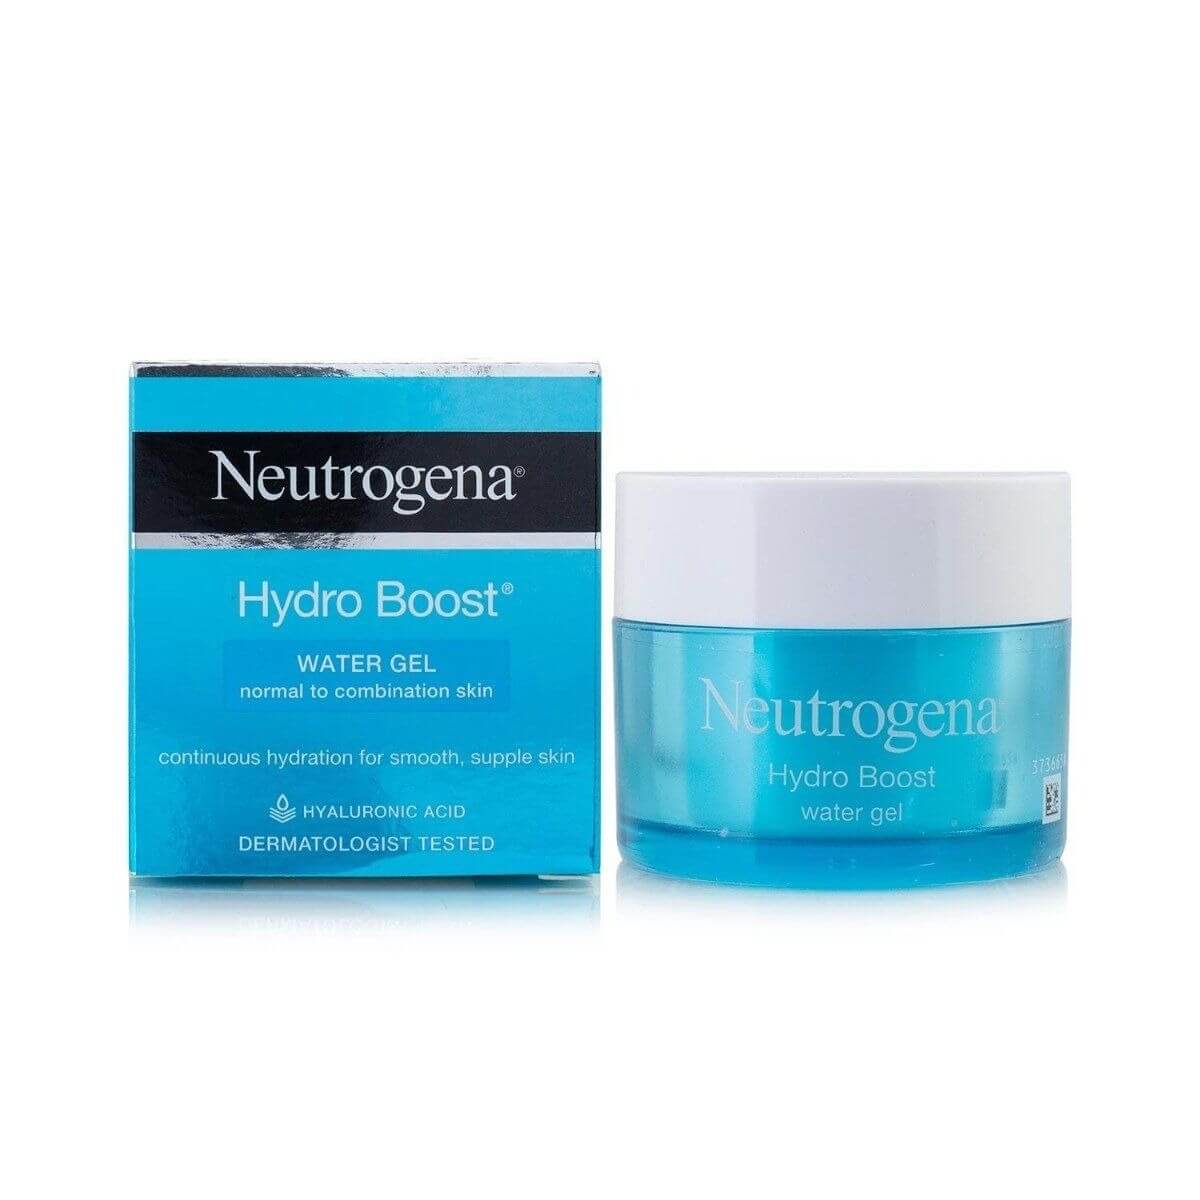 1592320735neutrogena-moisturizer-water-gel-hydro-boost-normal-to-combination-skin-50ml.jpg